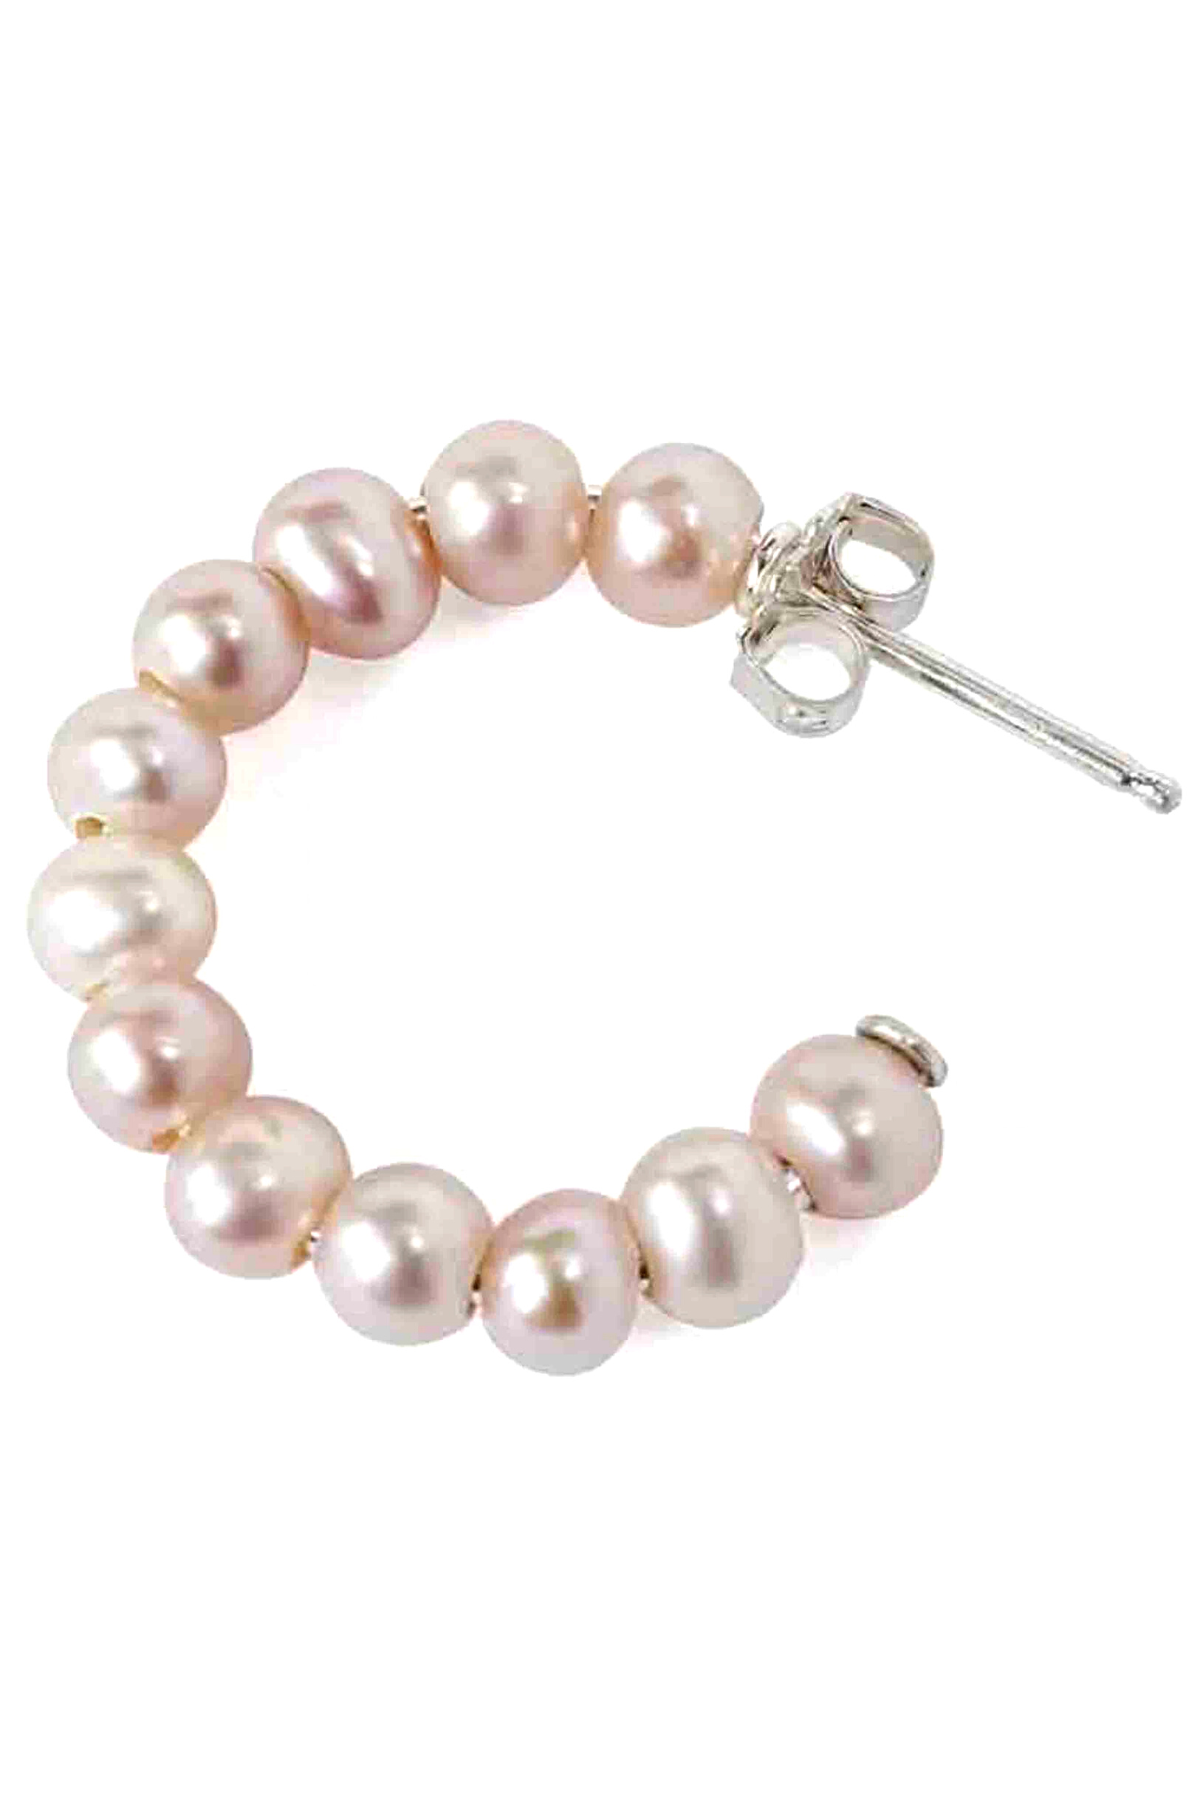 A classic hoop earring by Chan Luu in a pink pearl